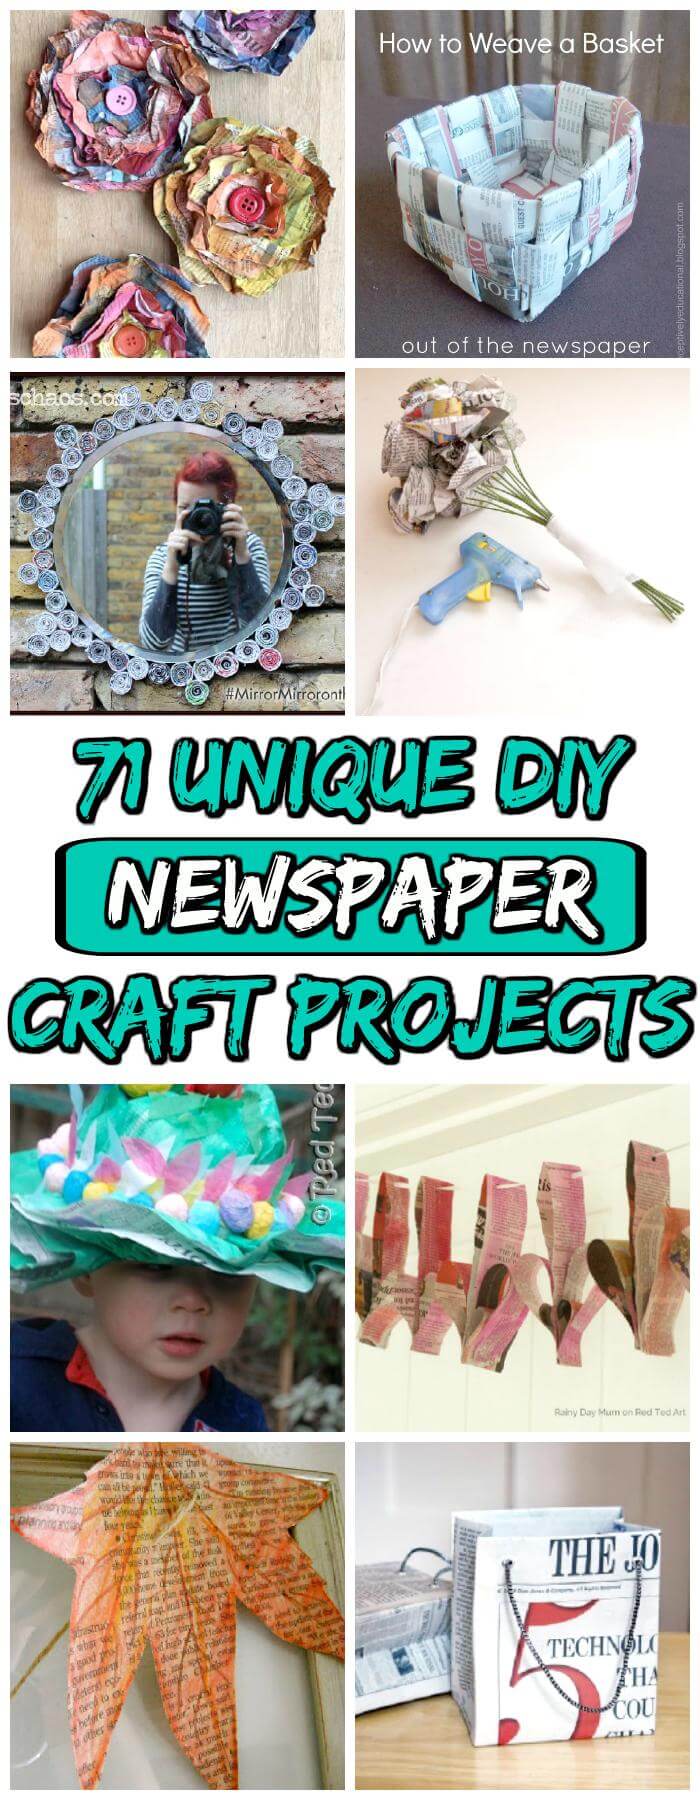 71-Unique-DIY-Newspaper-Craft-Projects